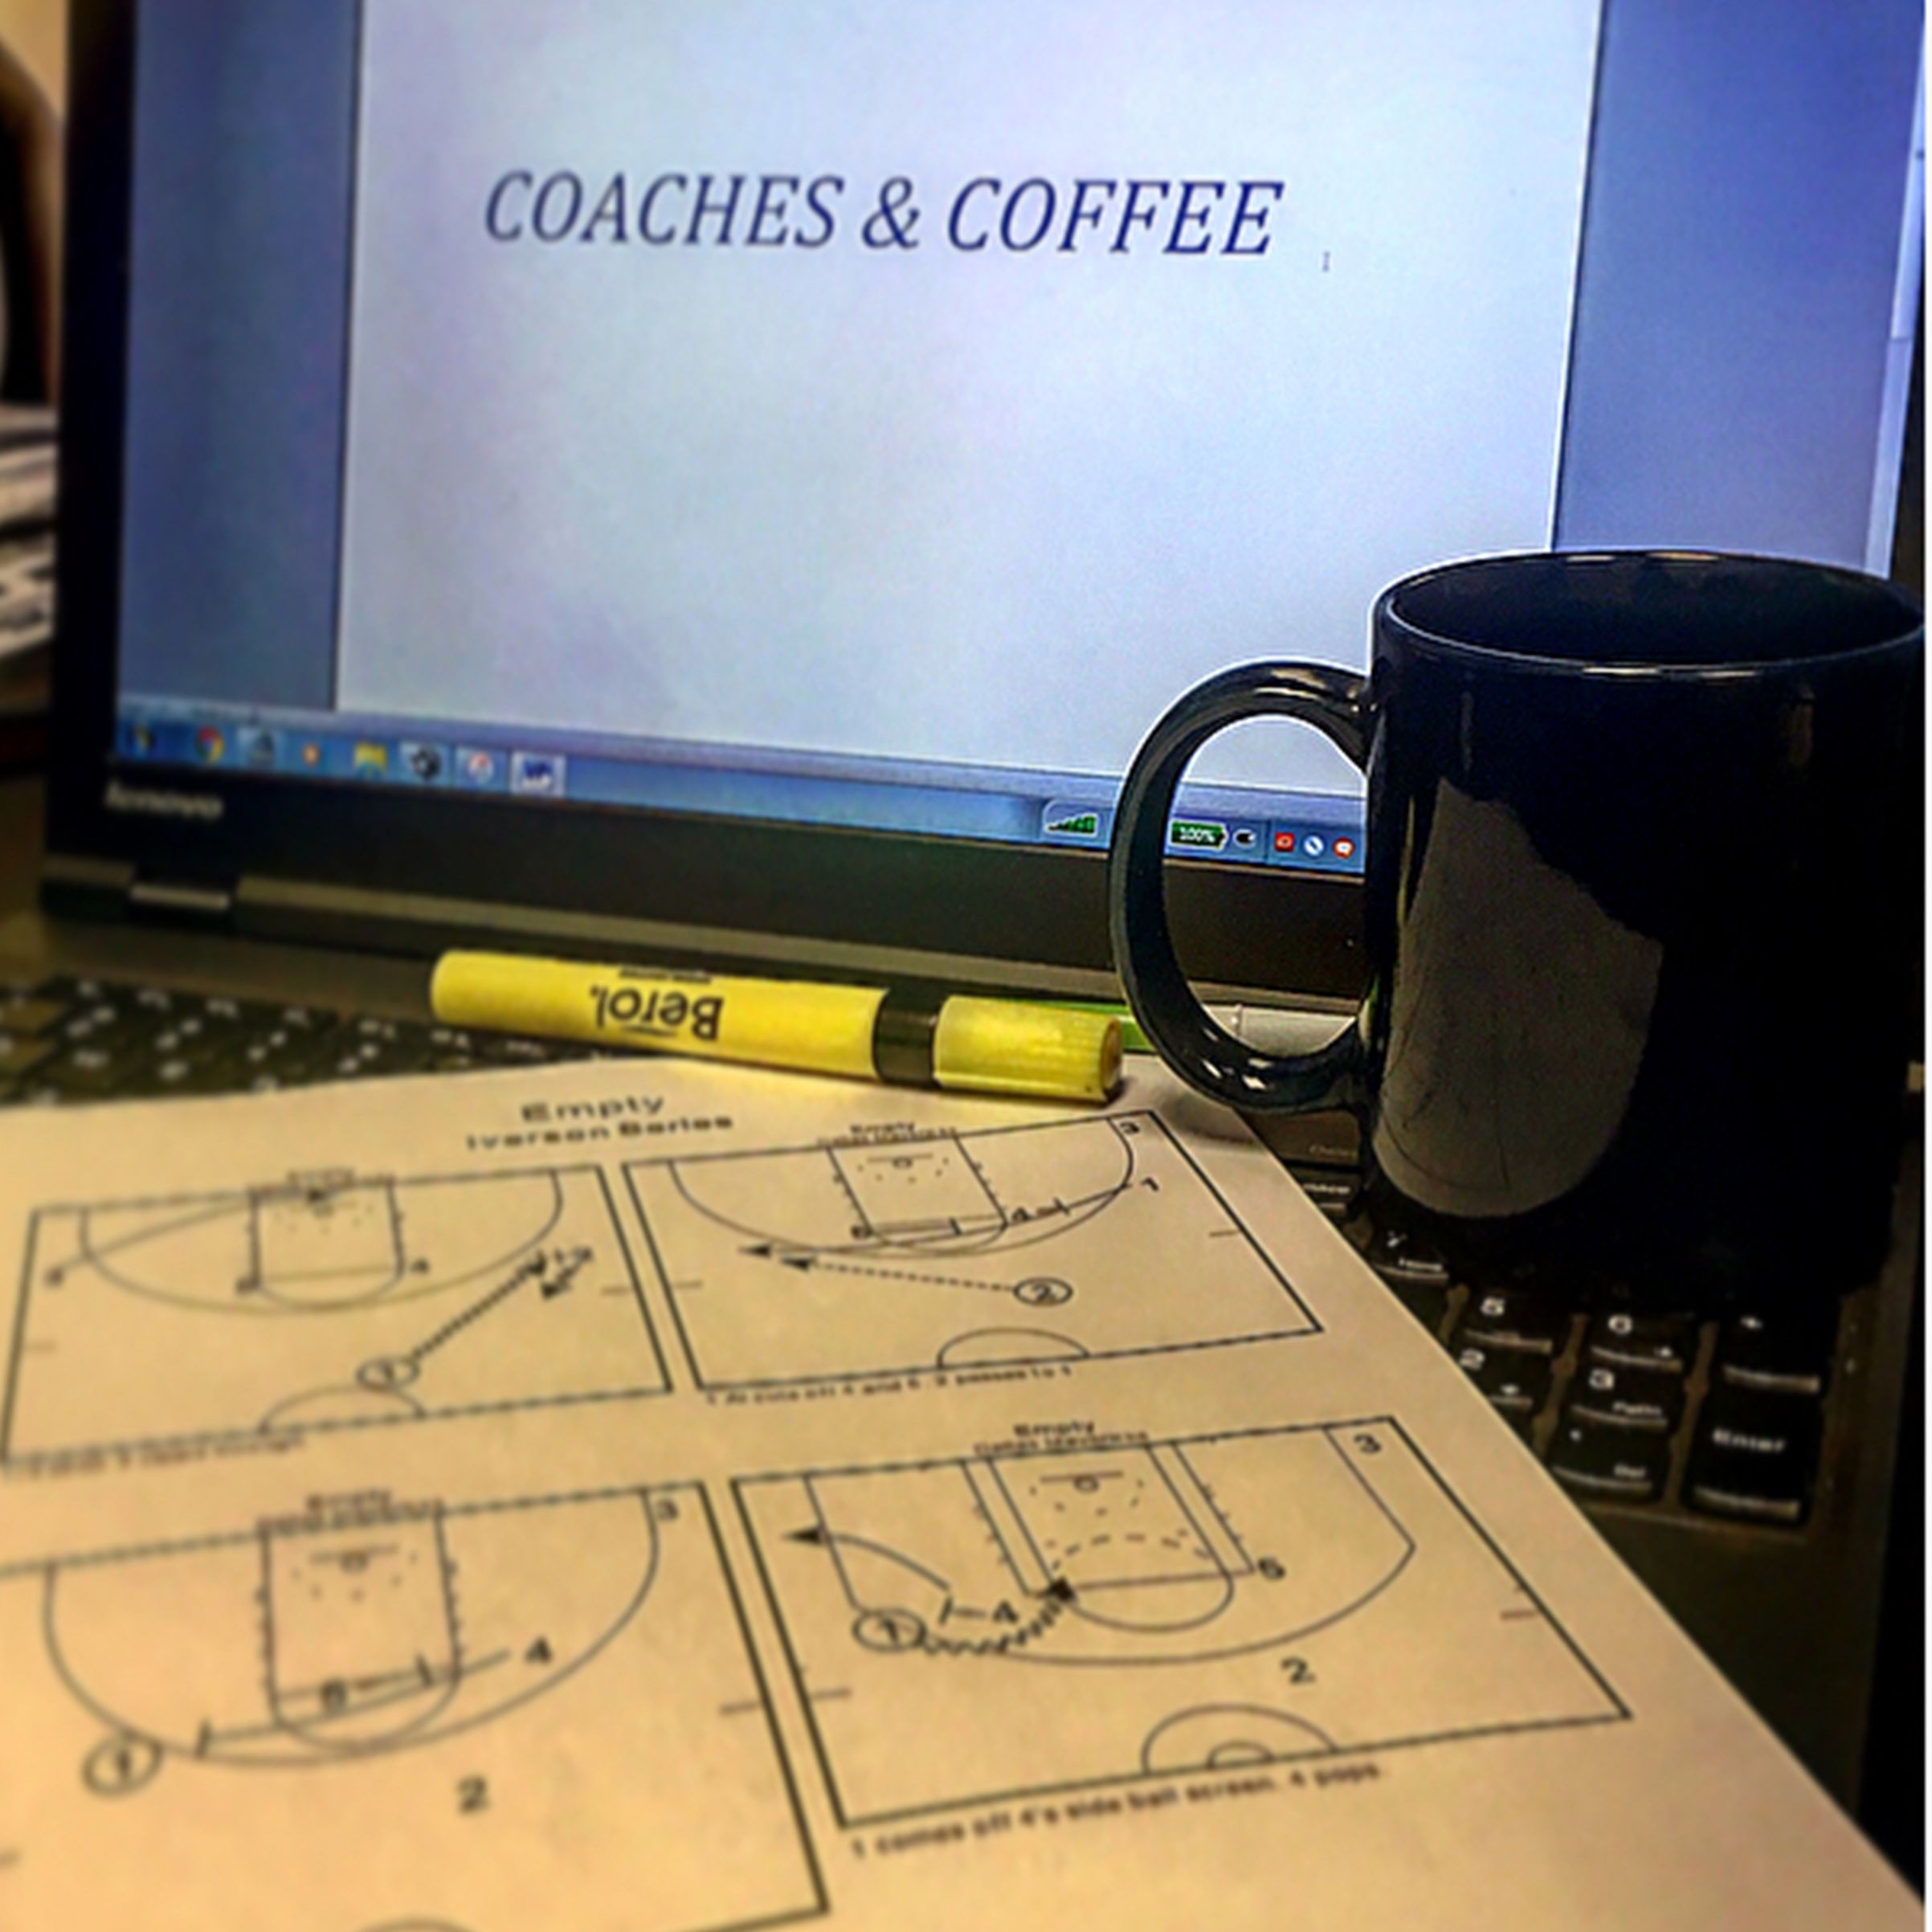 Coaches & Coffee